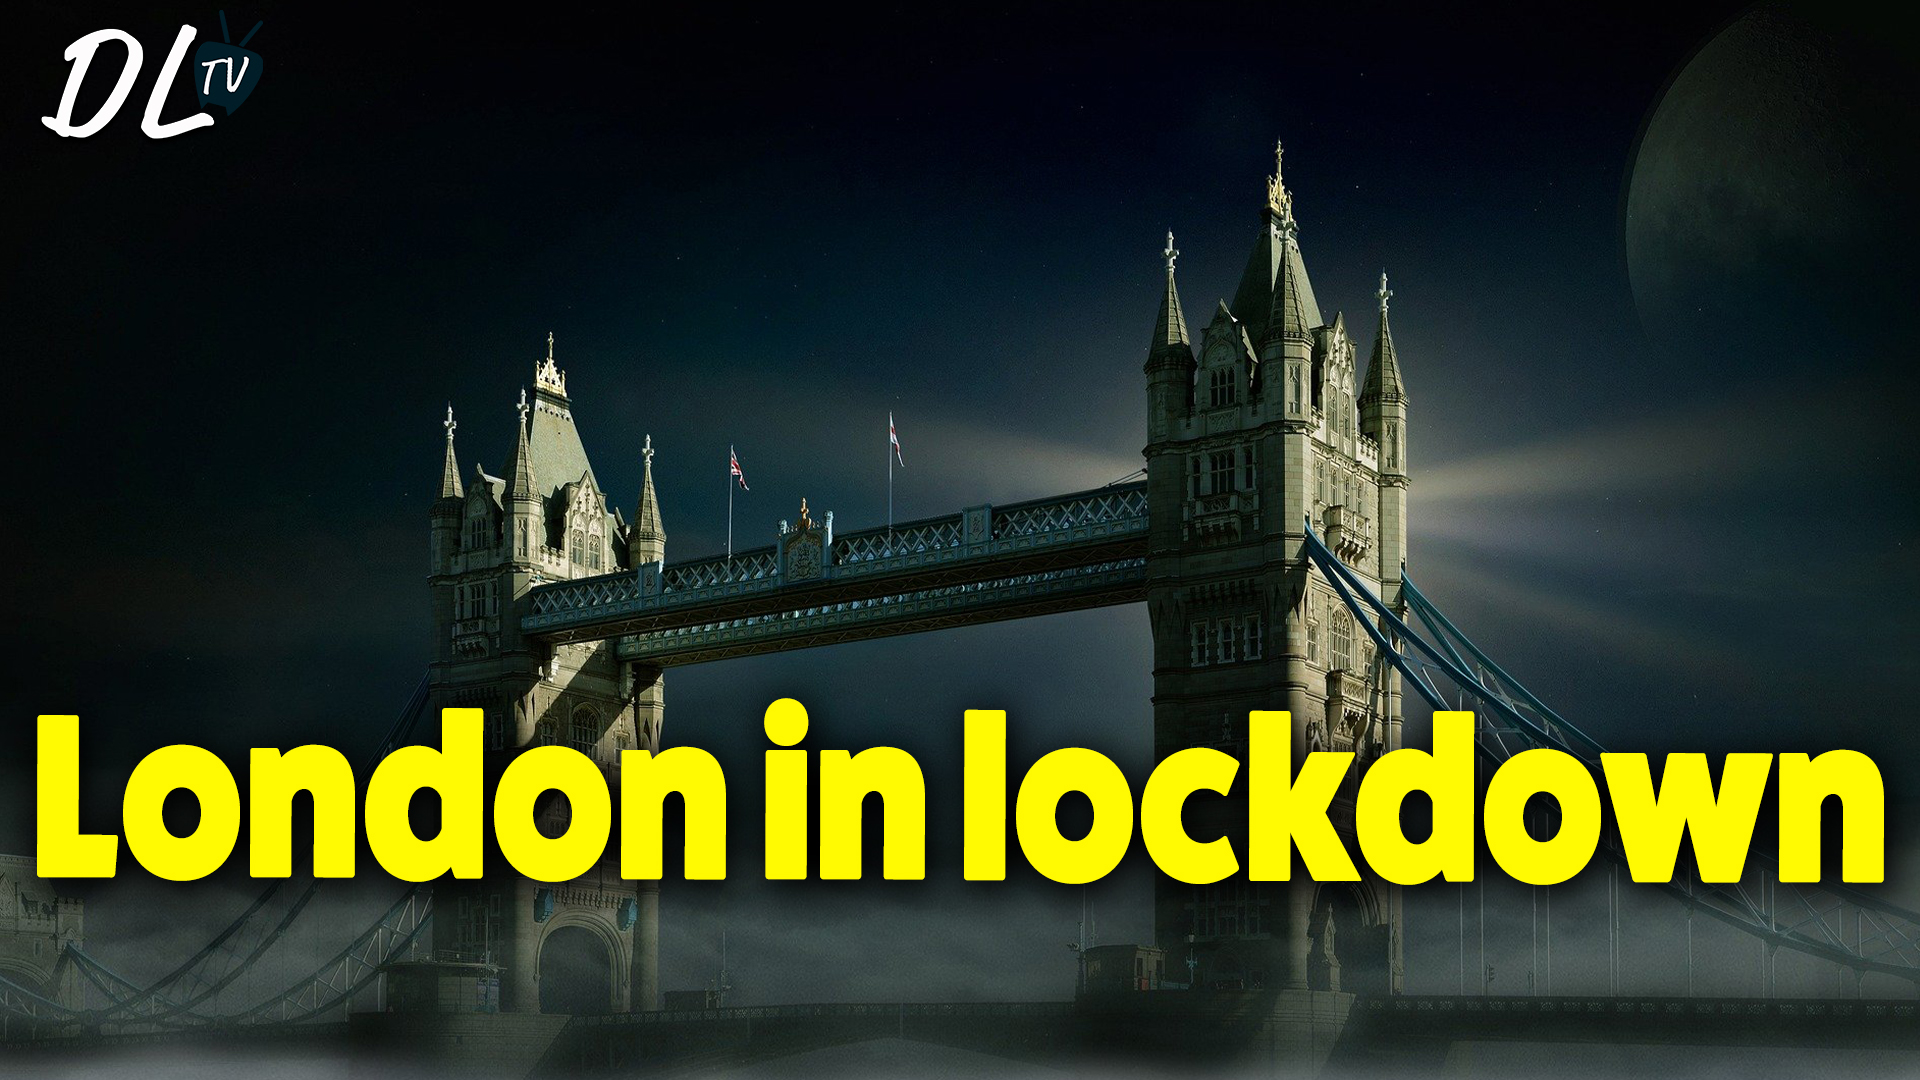 London in lockdown